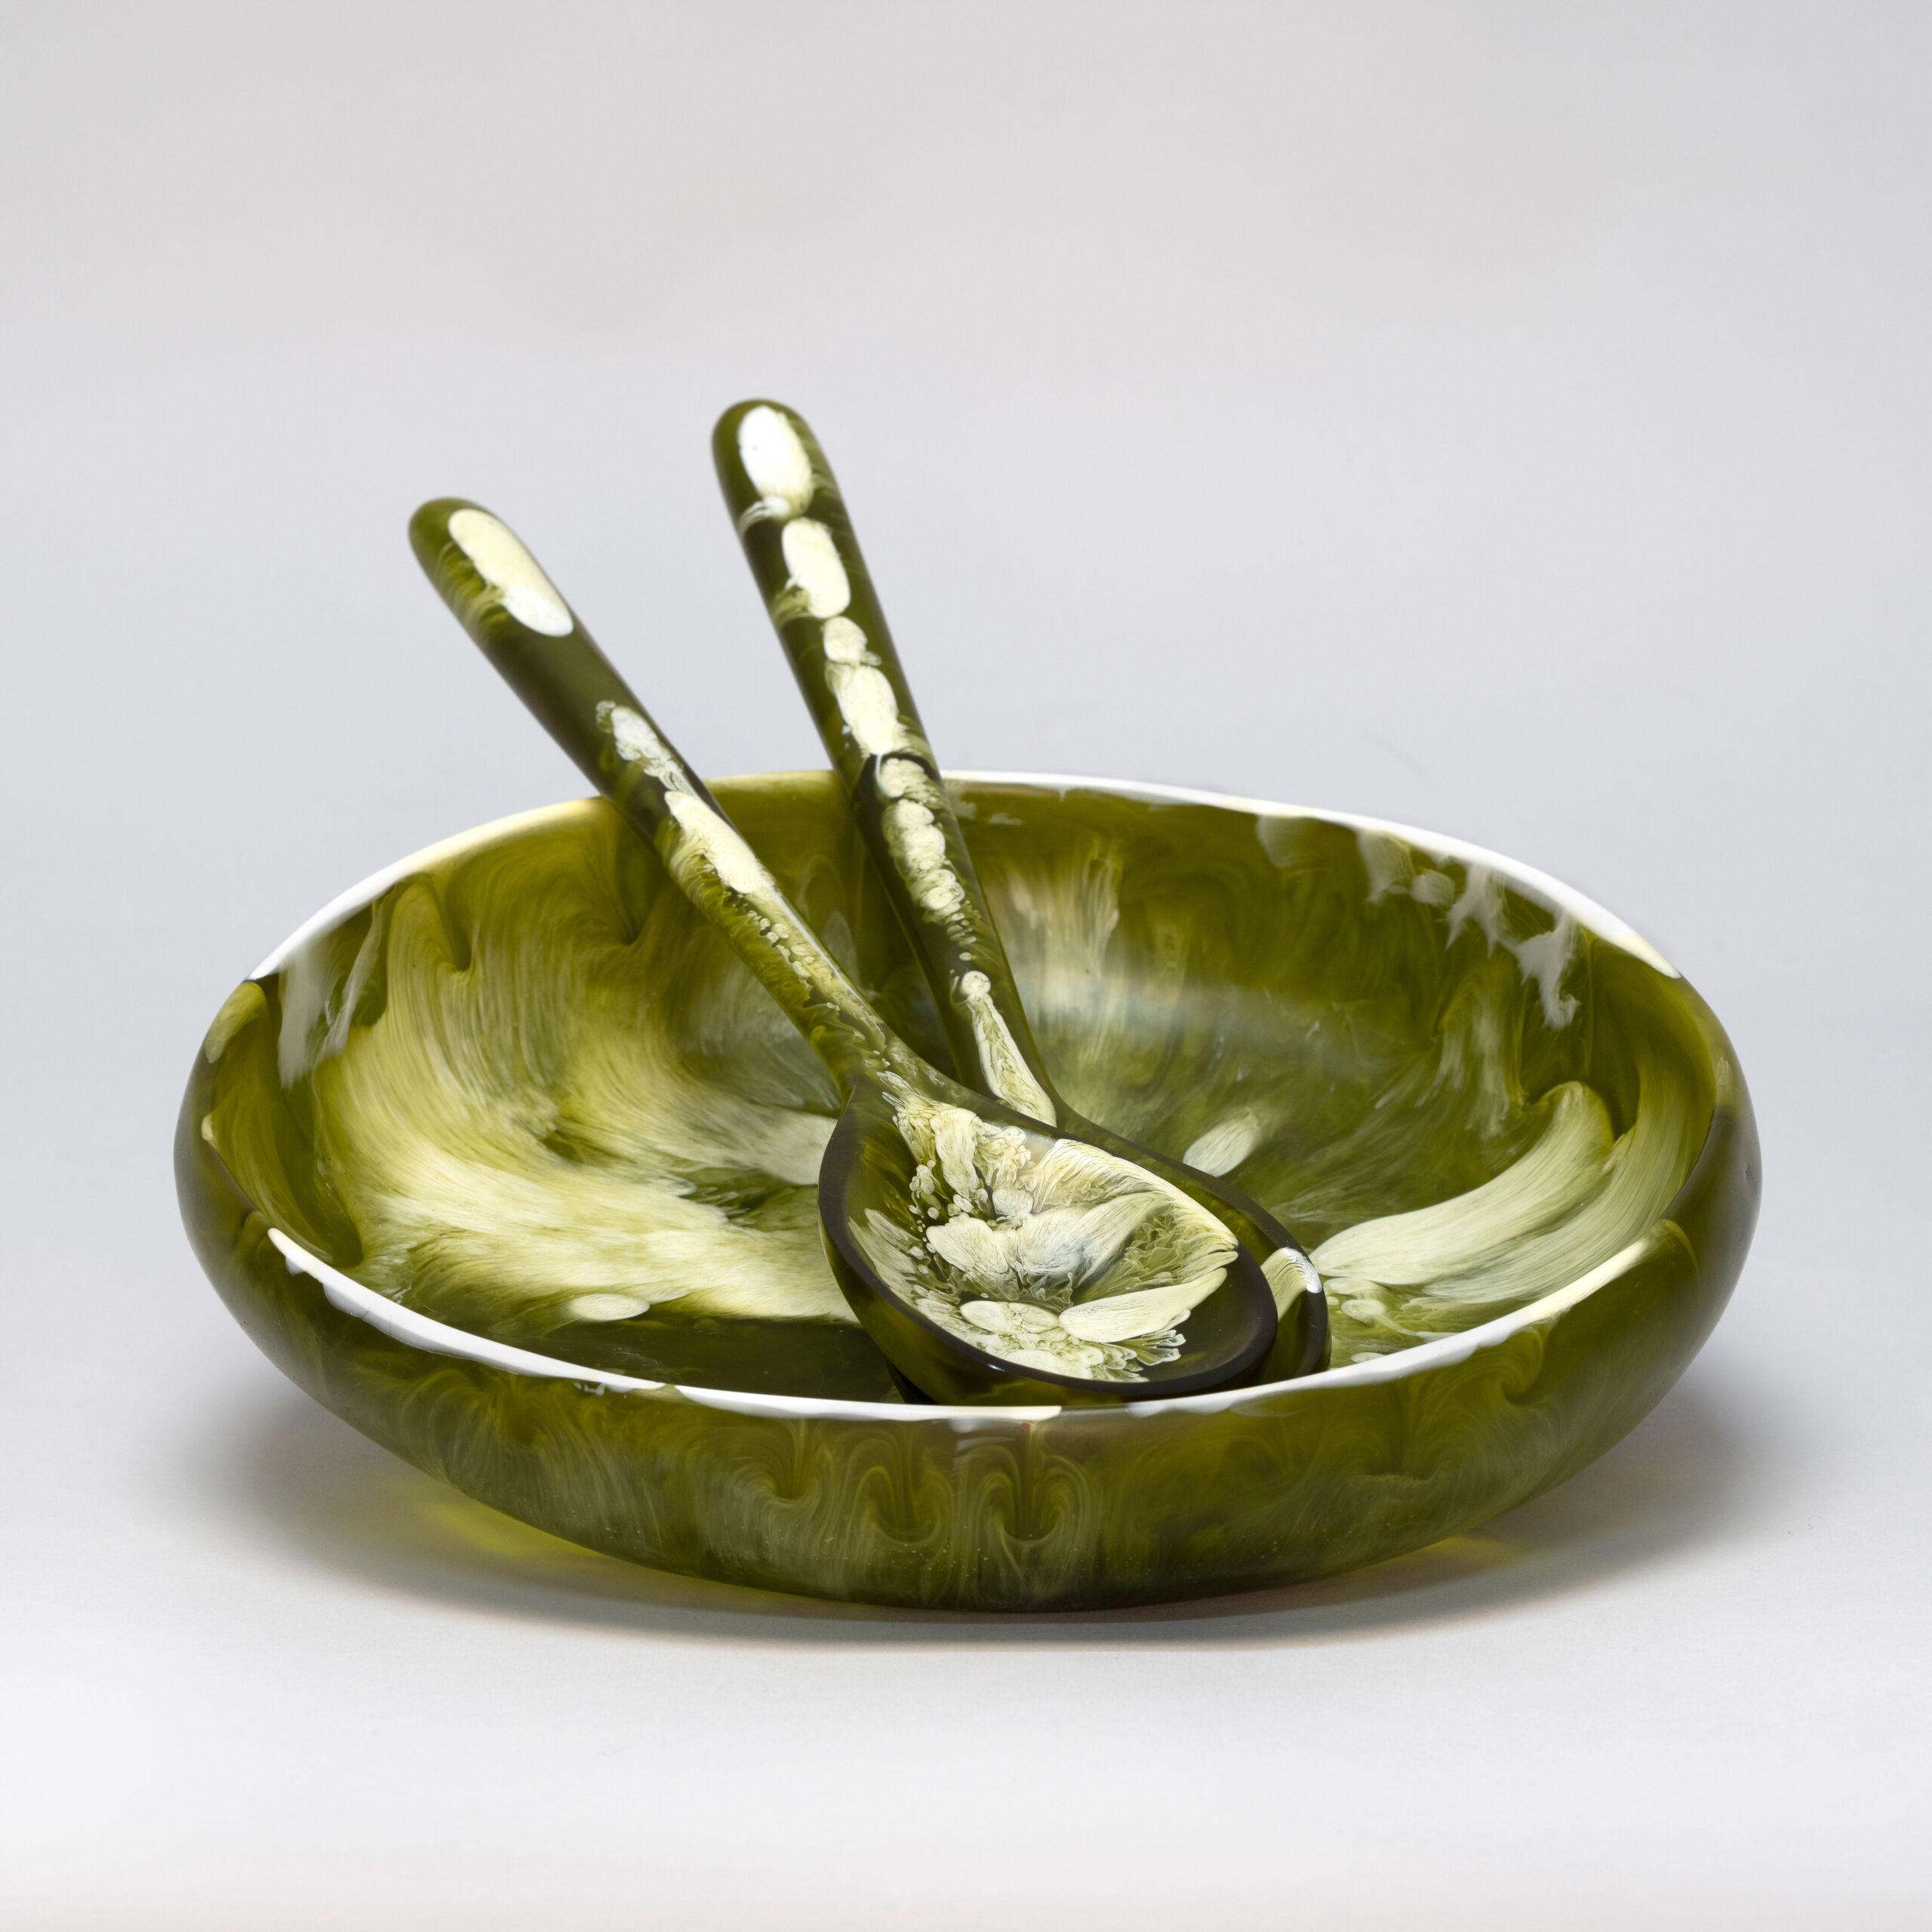 Seajay Art Olive-Green-large-bowls-1011-36a45bed40359e68e9084c21767cfe61-scaled